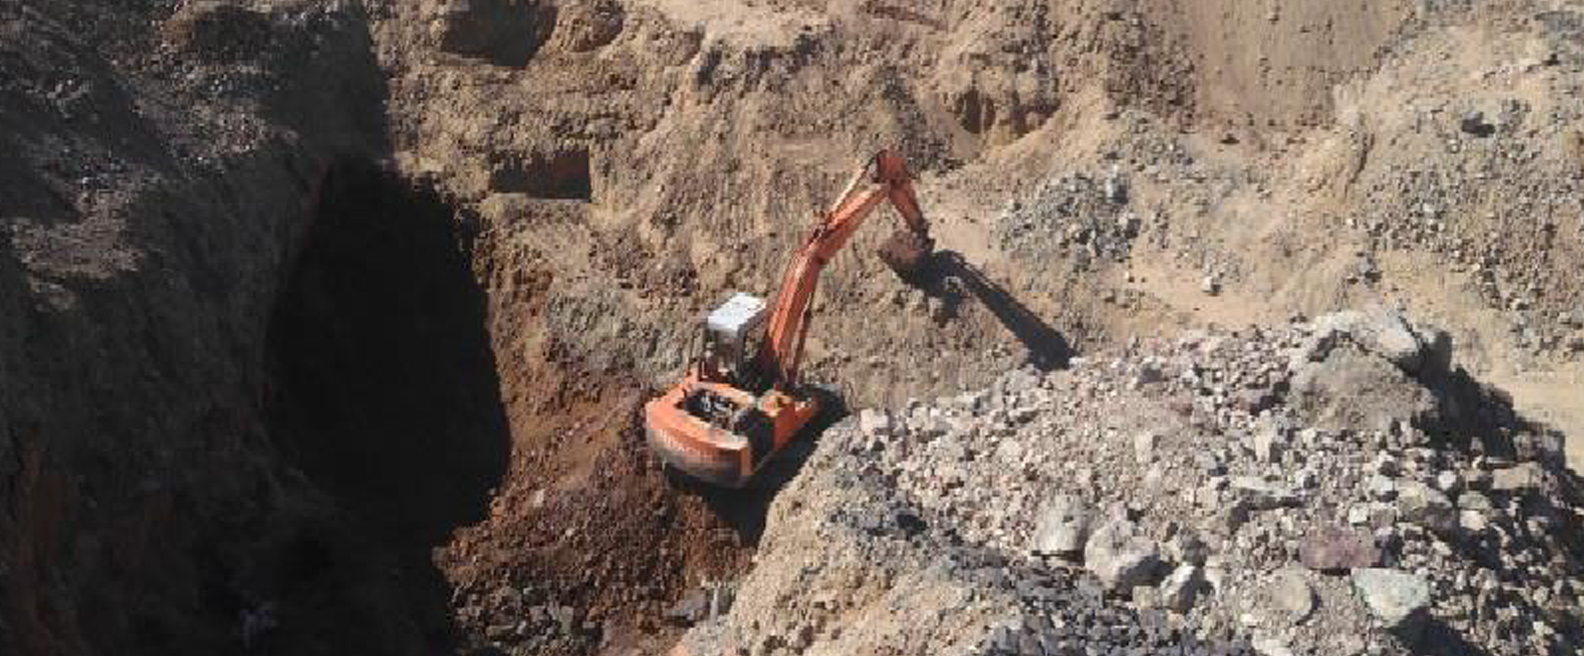 Mining in progress at Pachinkoh, Nokkundi Iron Ore Balochistan